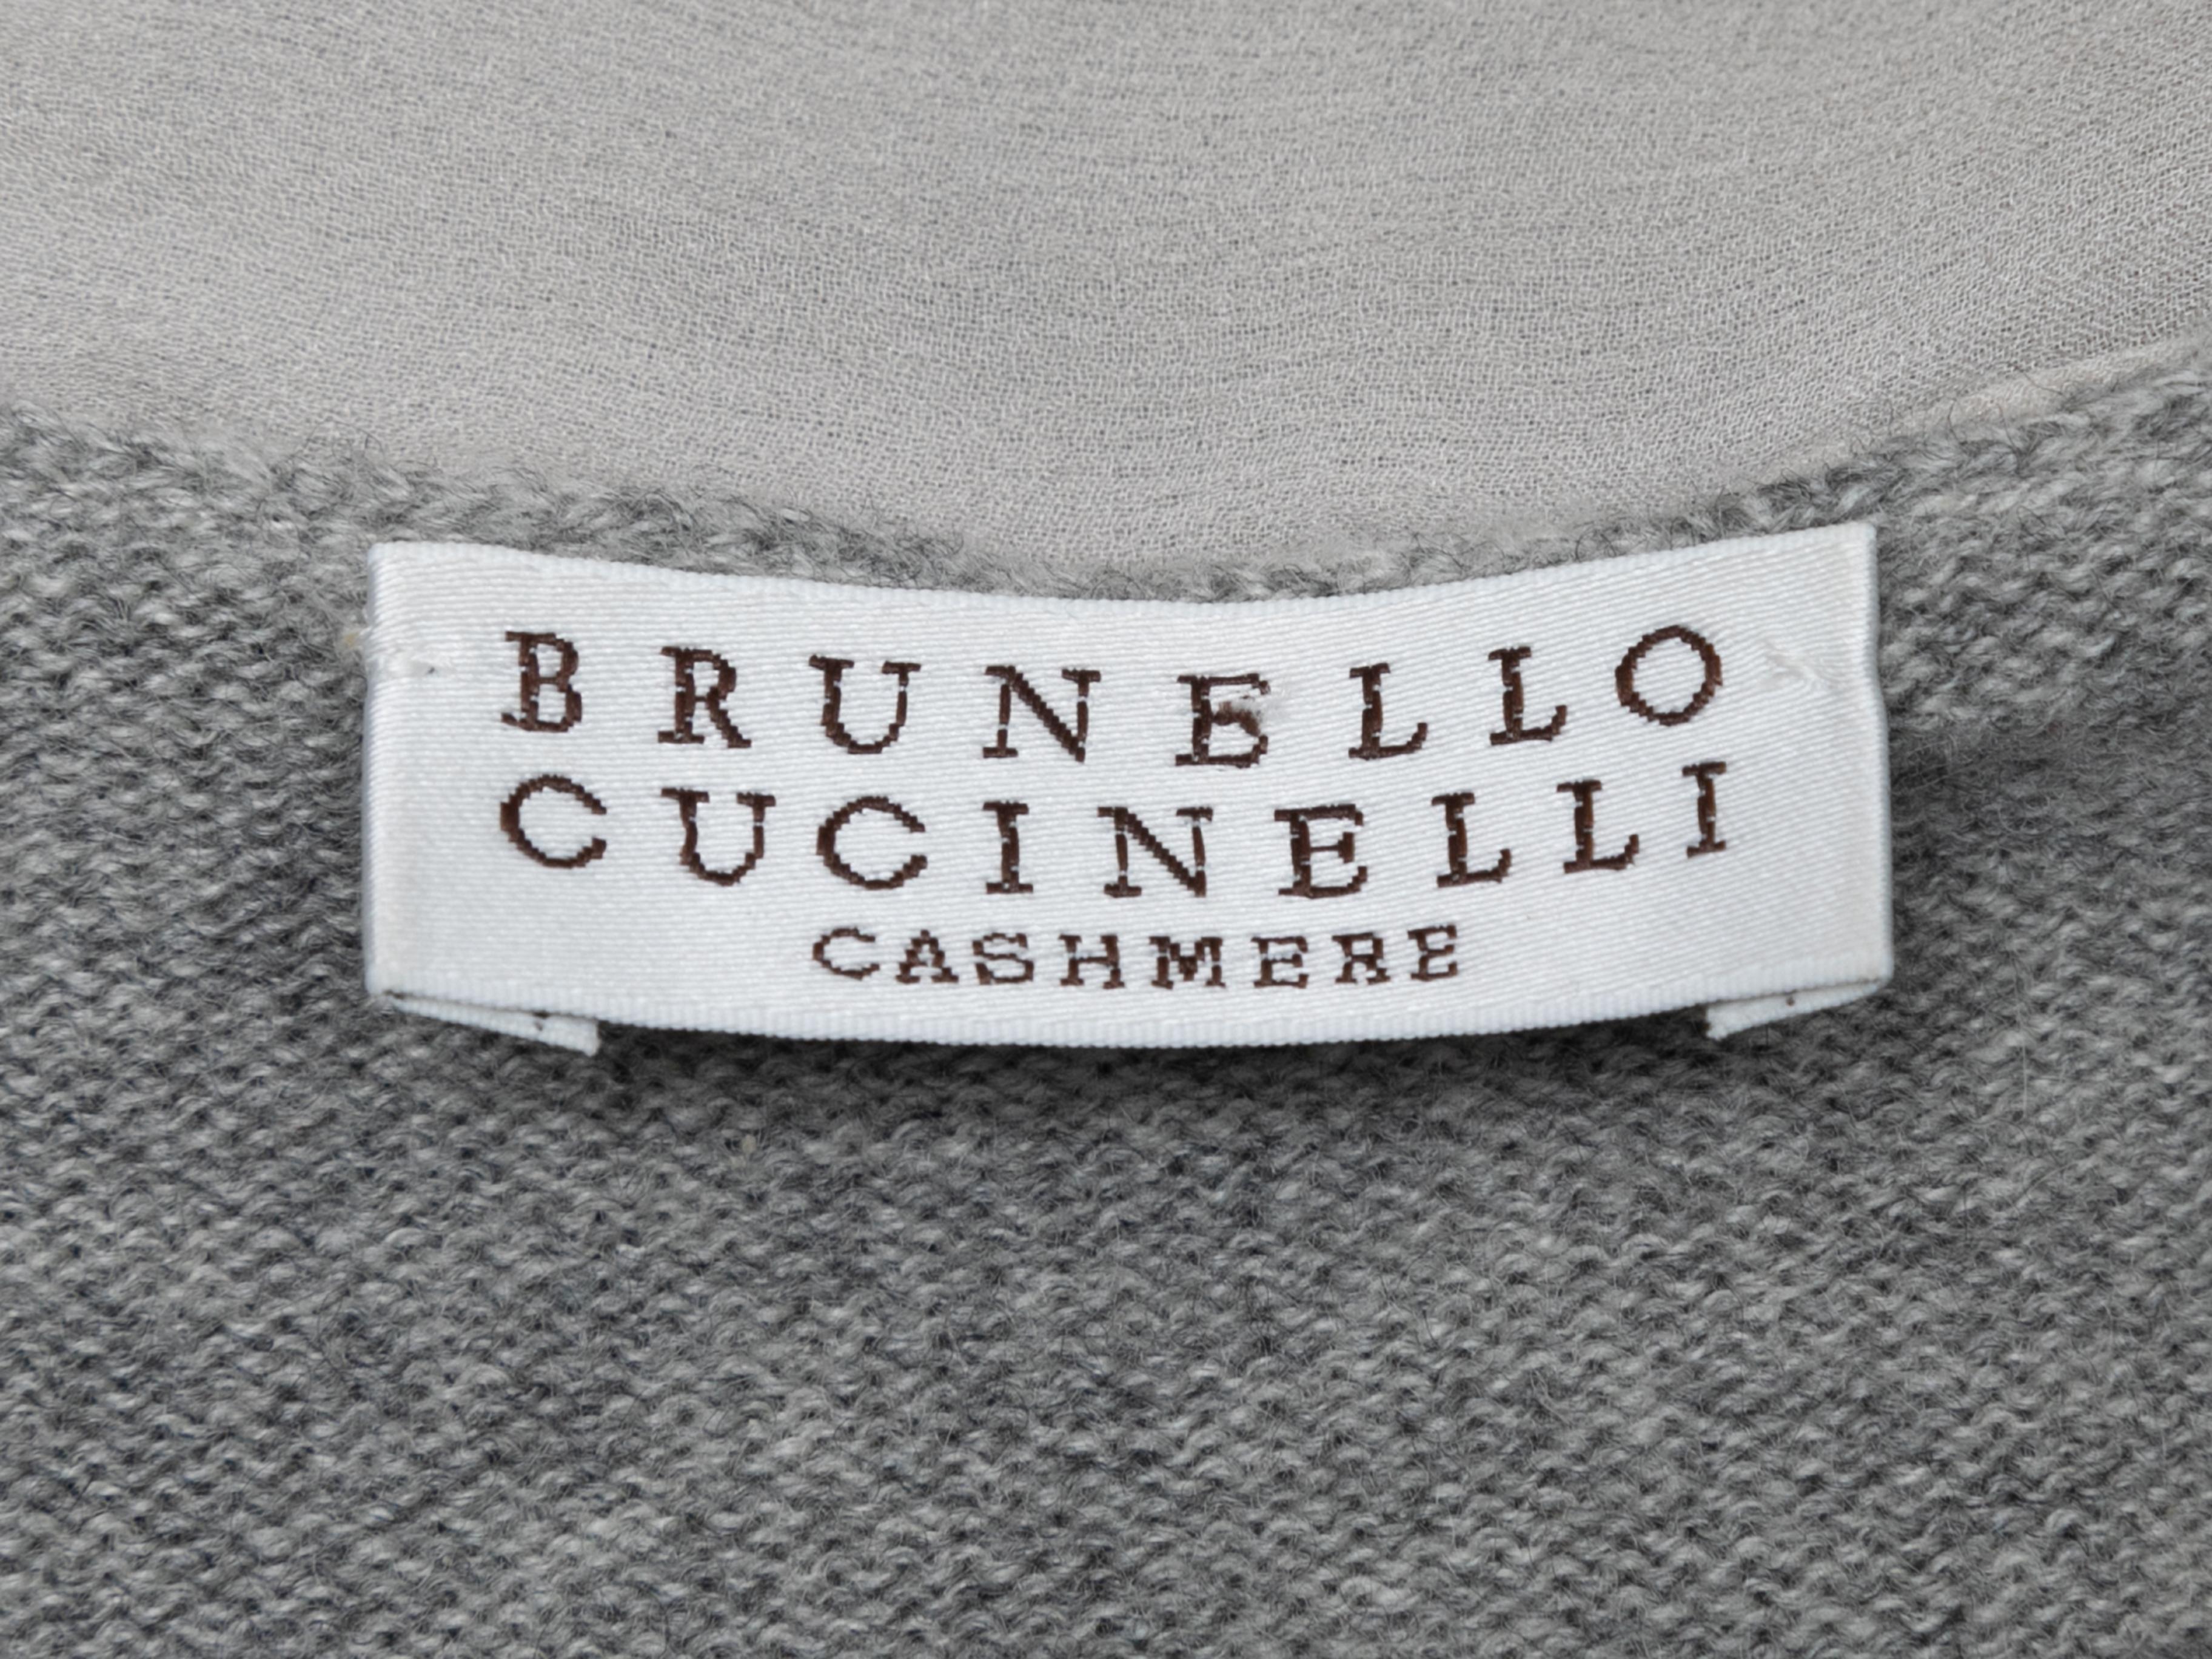 Grey cashmere and white silk-trimmed cardigan by Brunello Cucinelli. Sash tie closure at waist. 30